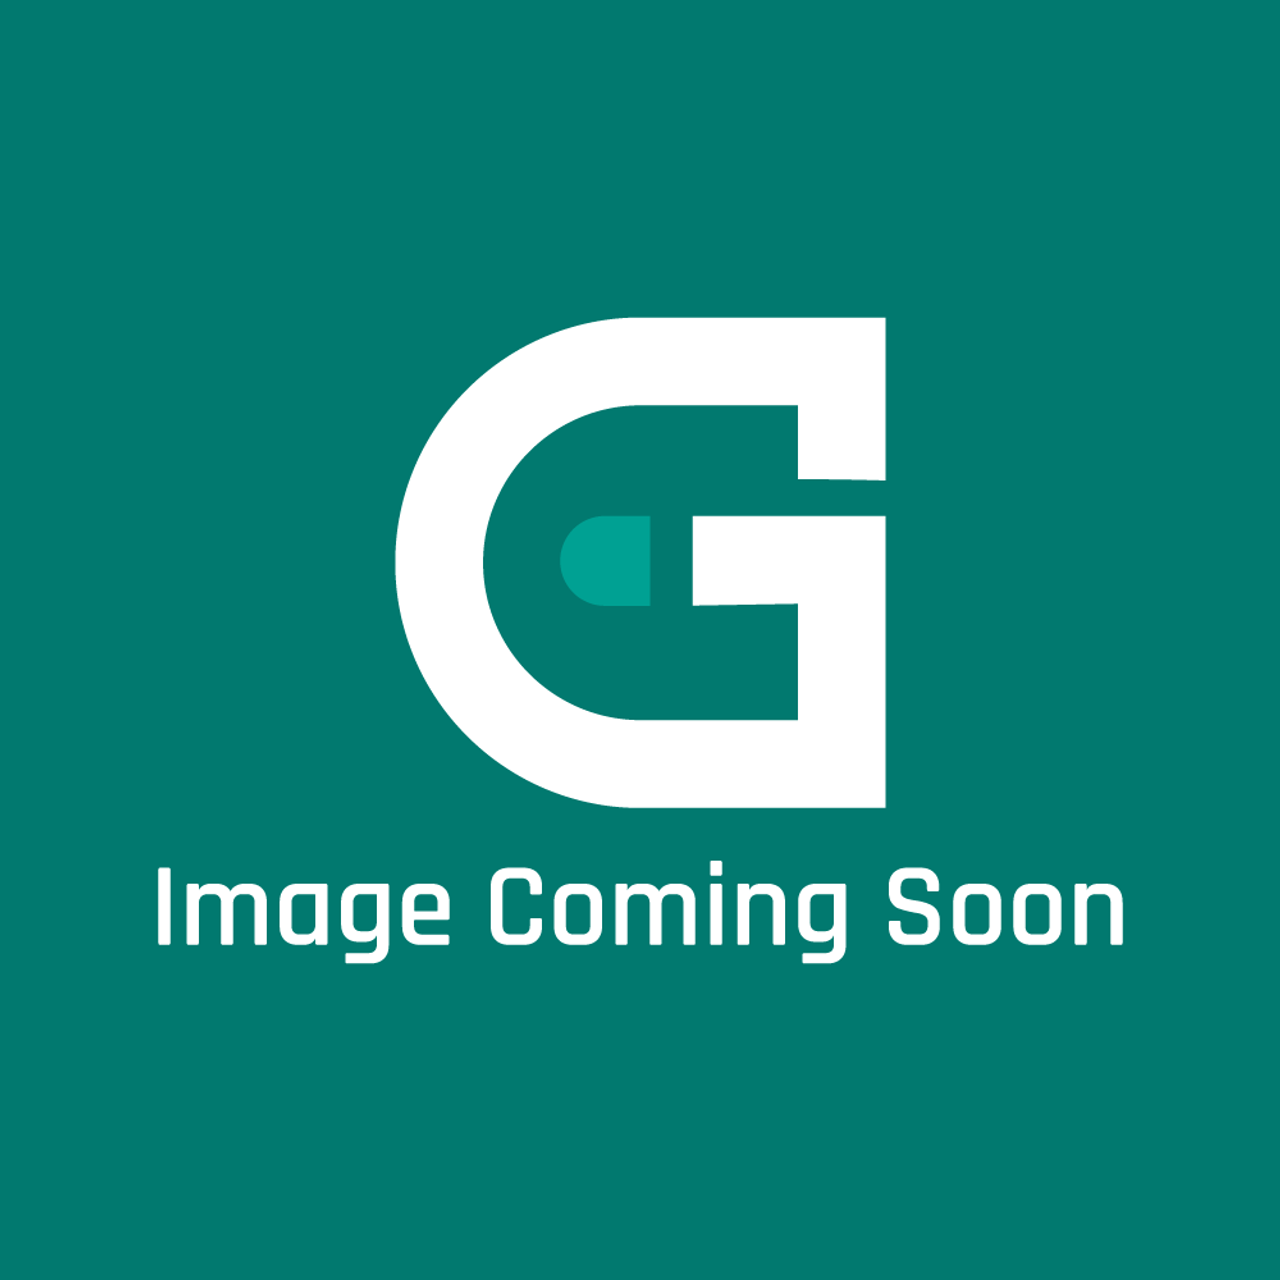 Garland 2676899 - Bulb Clamp/Shield Assy - Image Coming Soon!